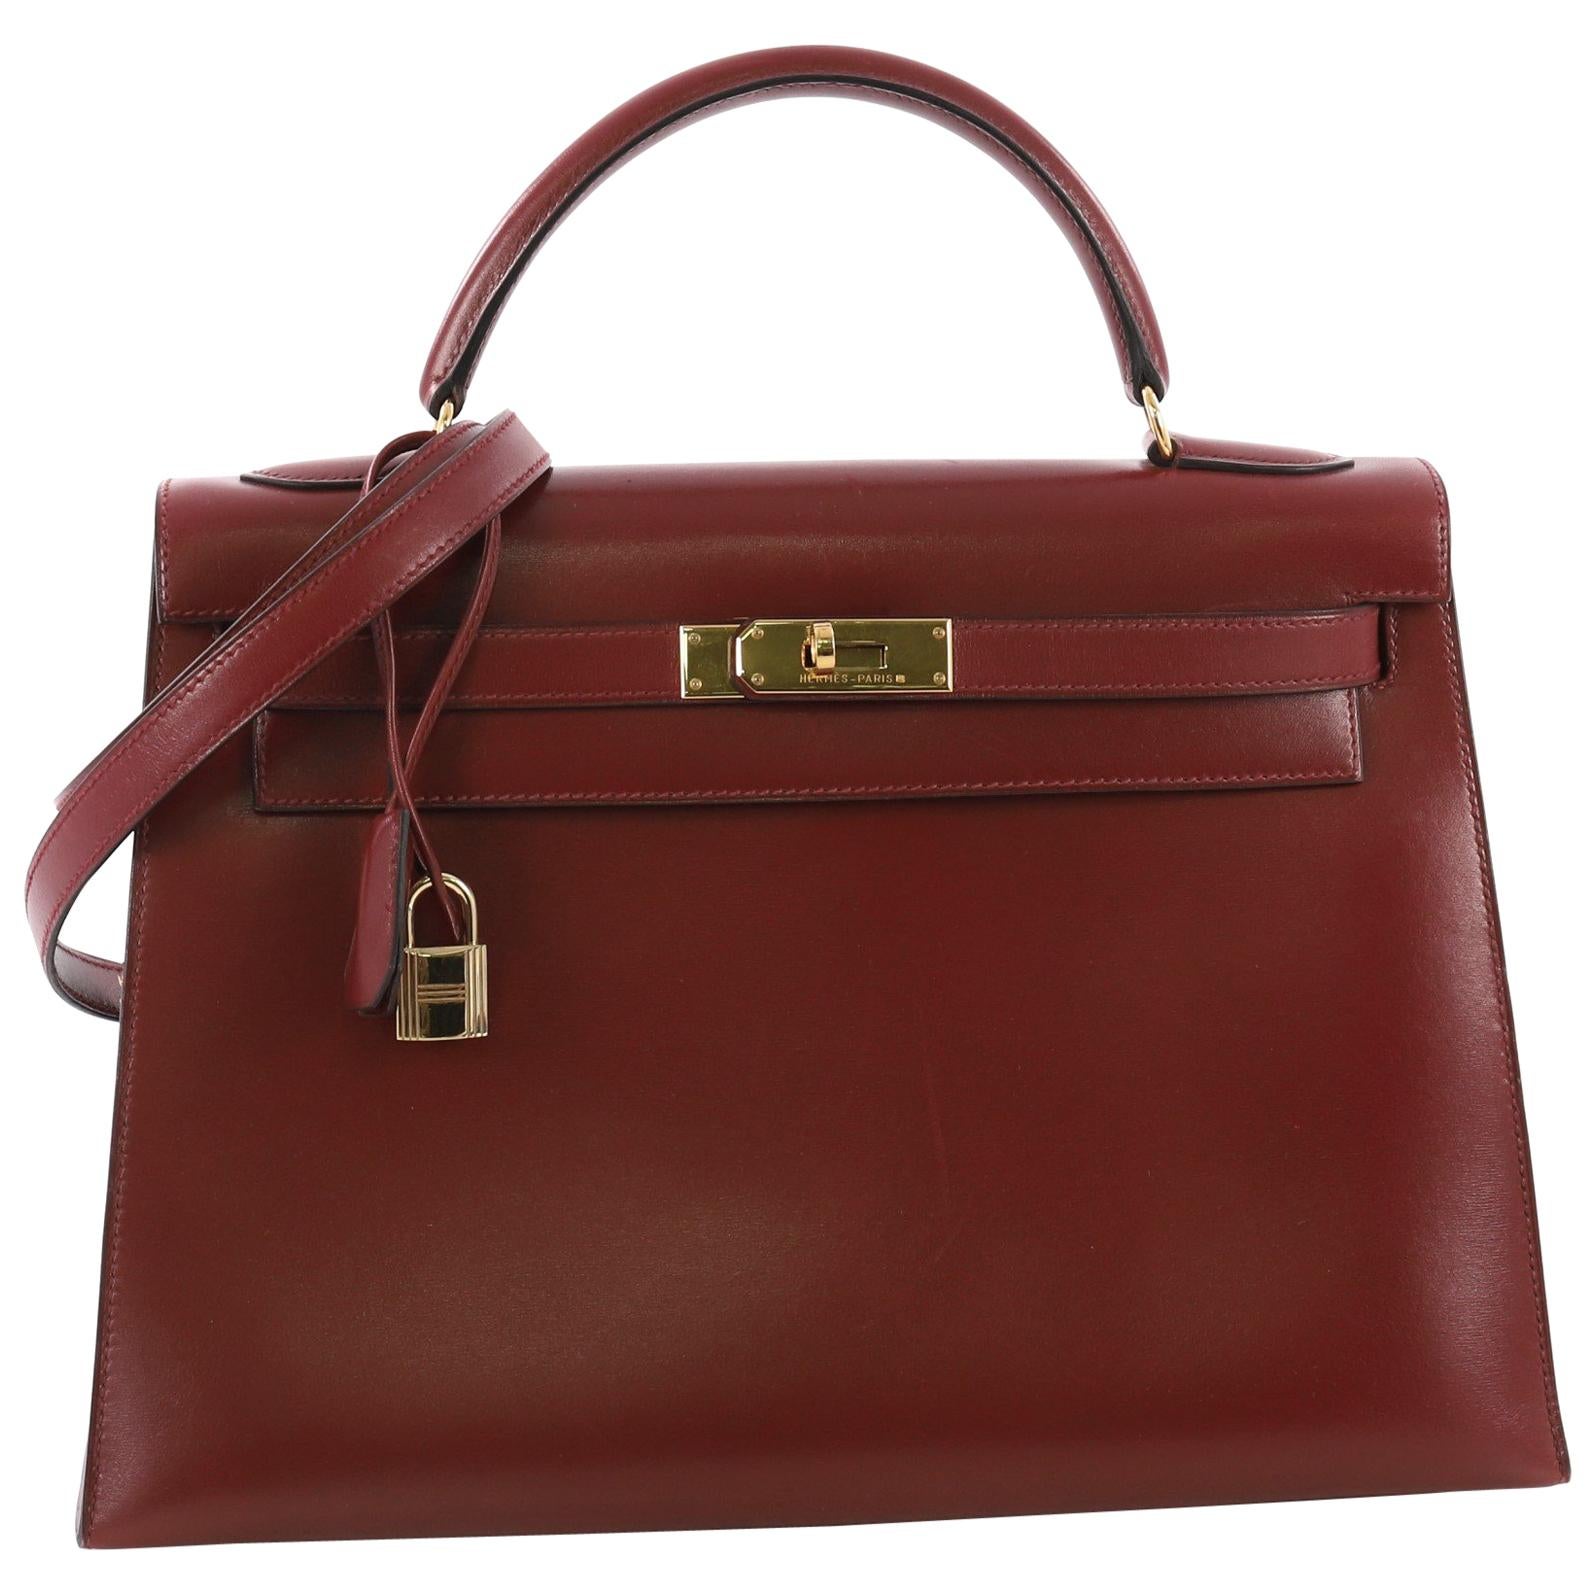  Hermes Kelly Handbag Rouge H Box Calf with Gold Hardware 32